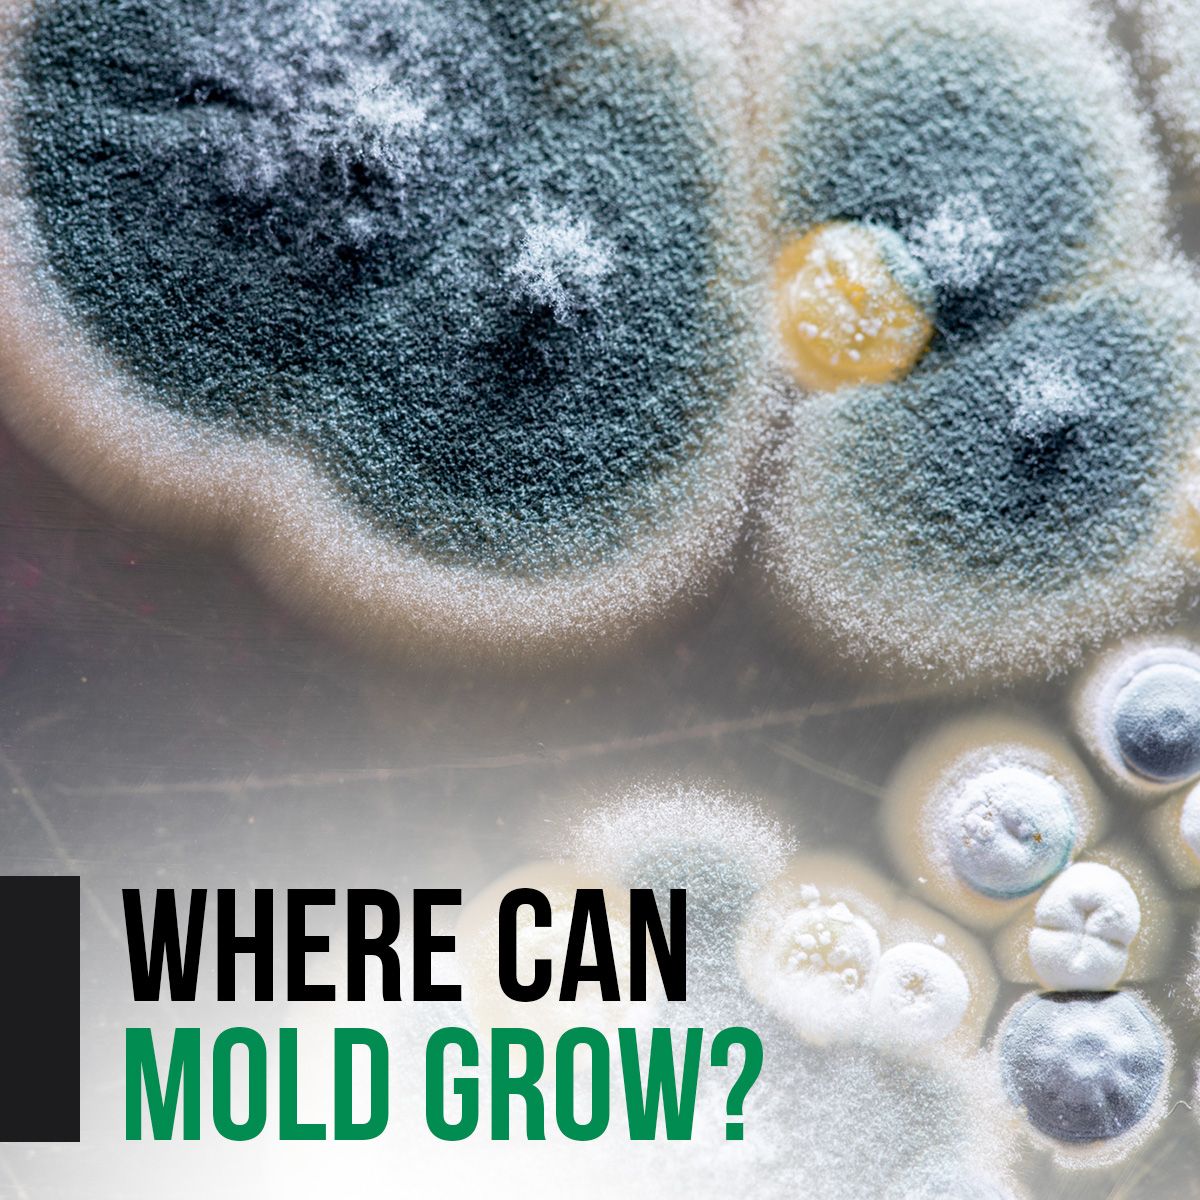 Where Can Mold Grow?